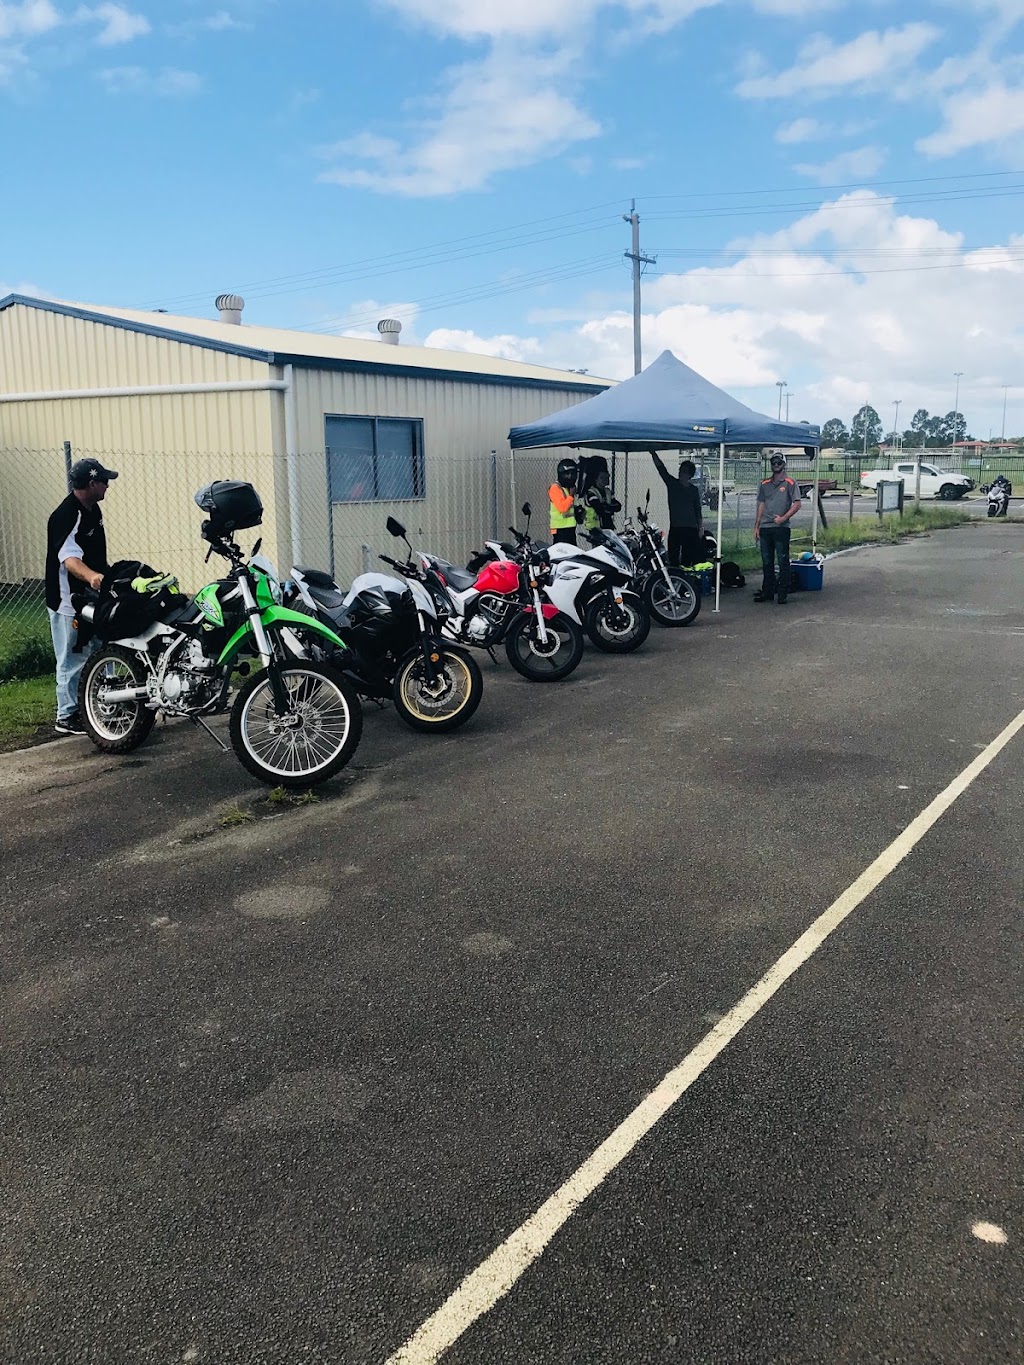 Saferider Motorcycle Training | Boundary Rd &, Tavistock St, Torquay QLD 4655, Australia | Phone: 0412 602 619